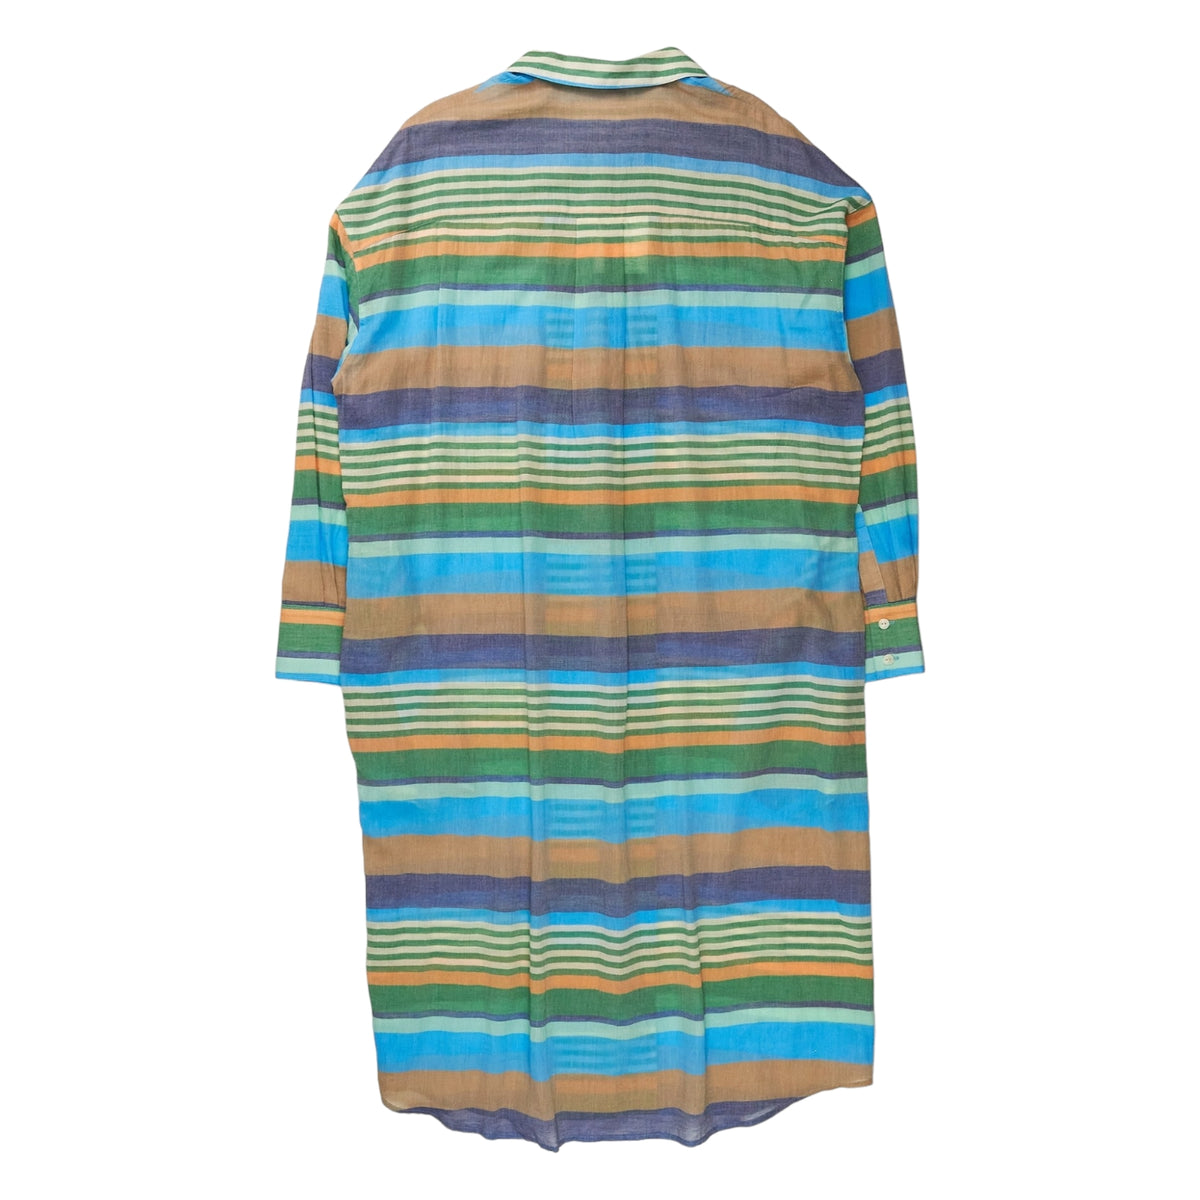 YMC Blue/Multi Stripe Shirt Dress